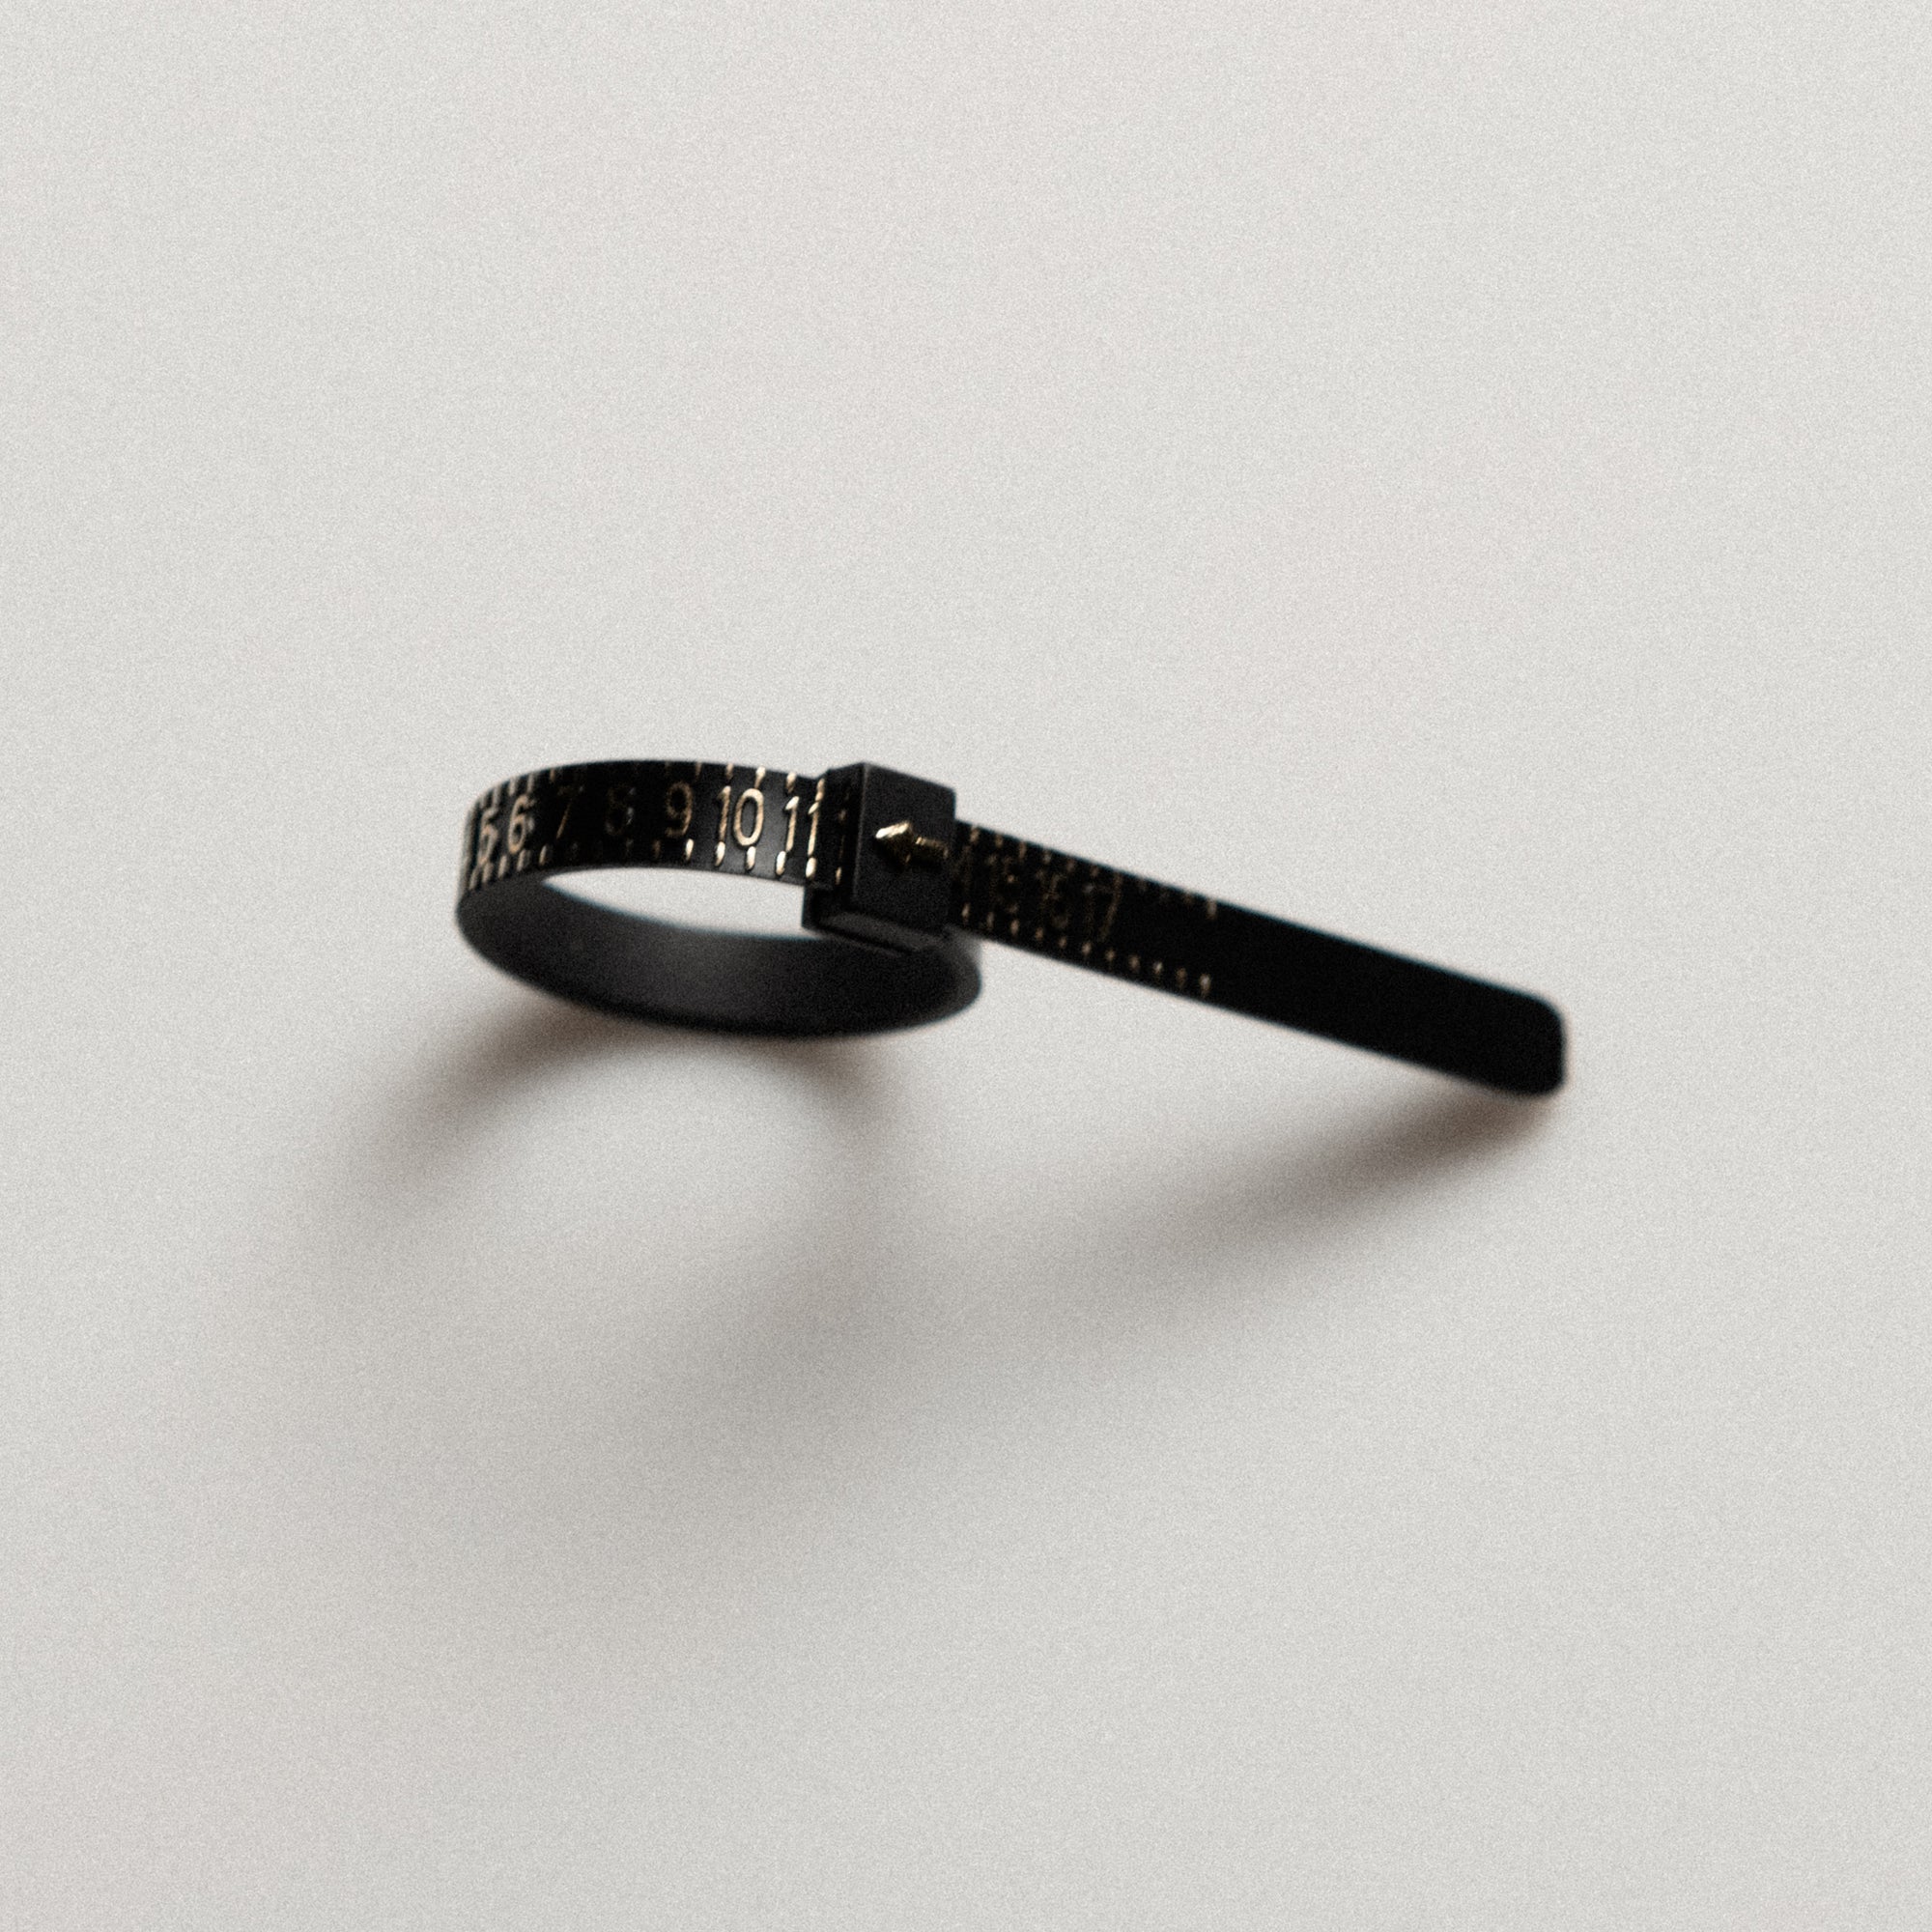 Plastic Ring sizer